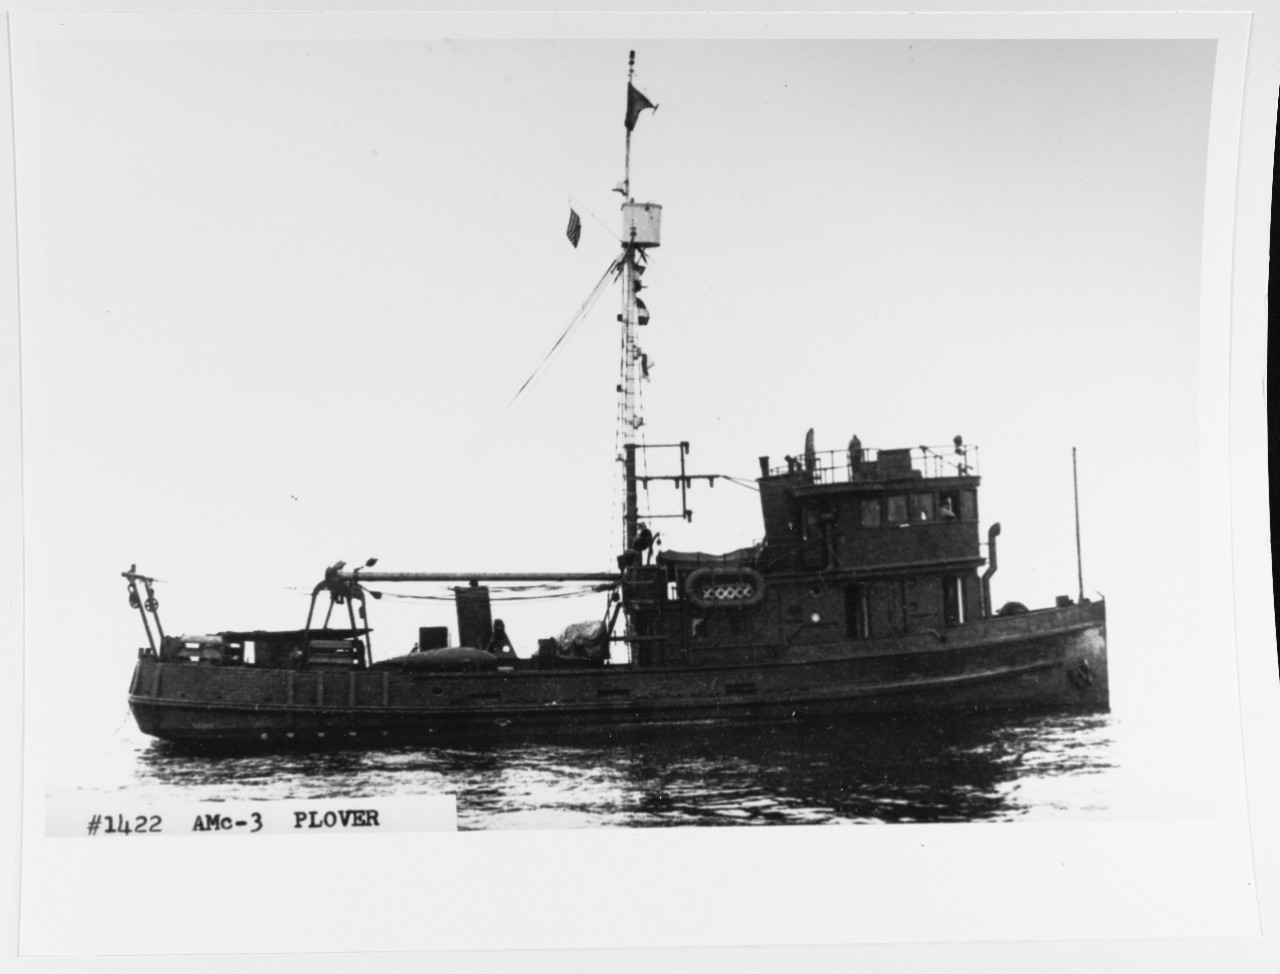 USS PLOVER (Am-3)